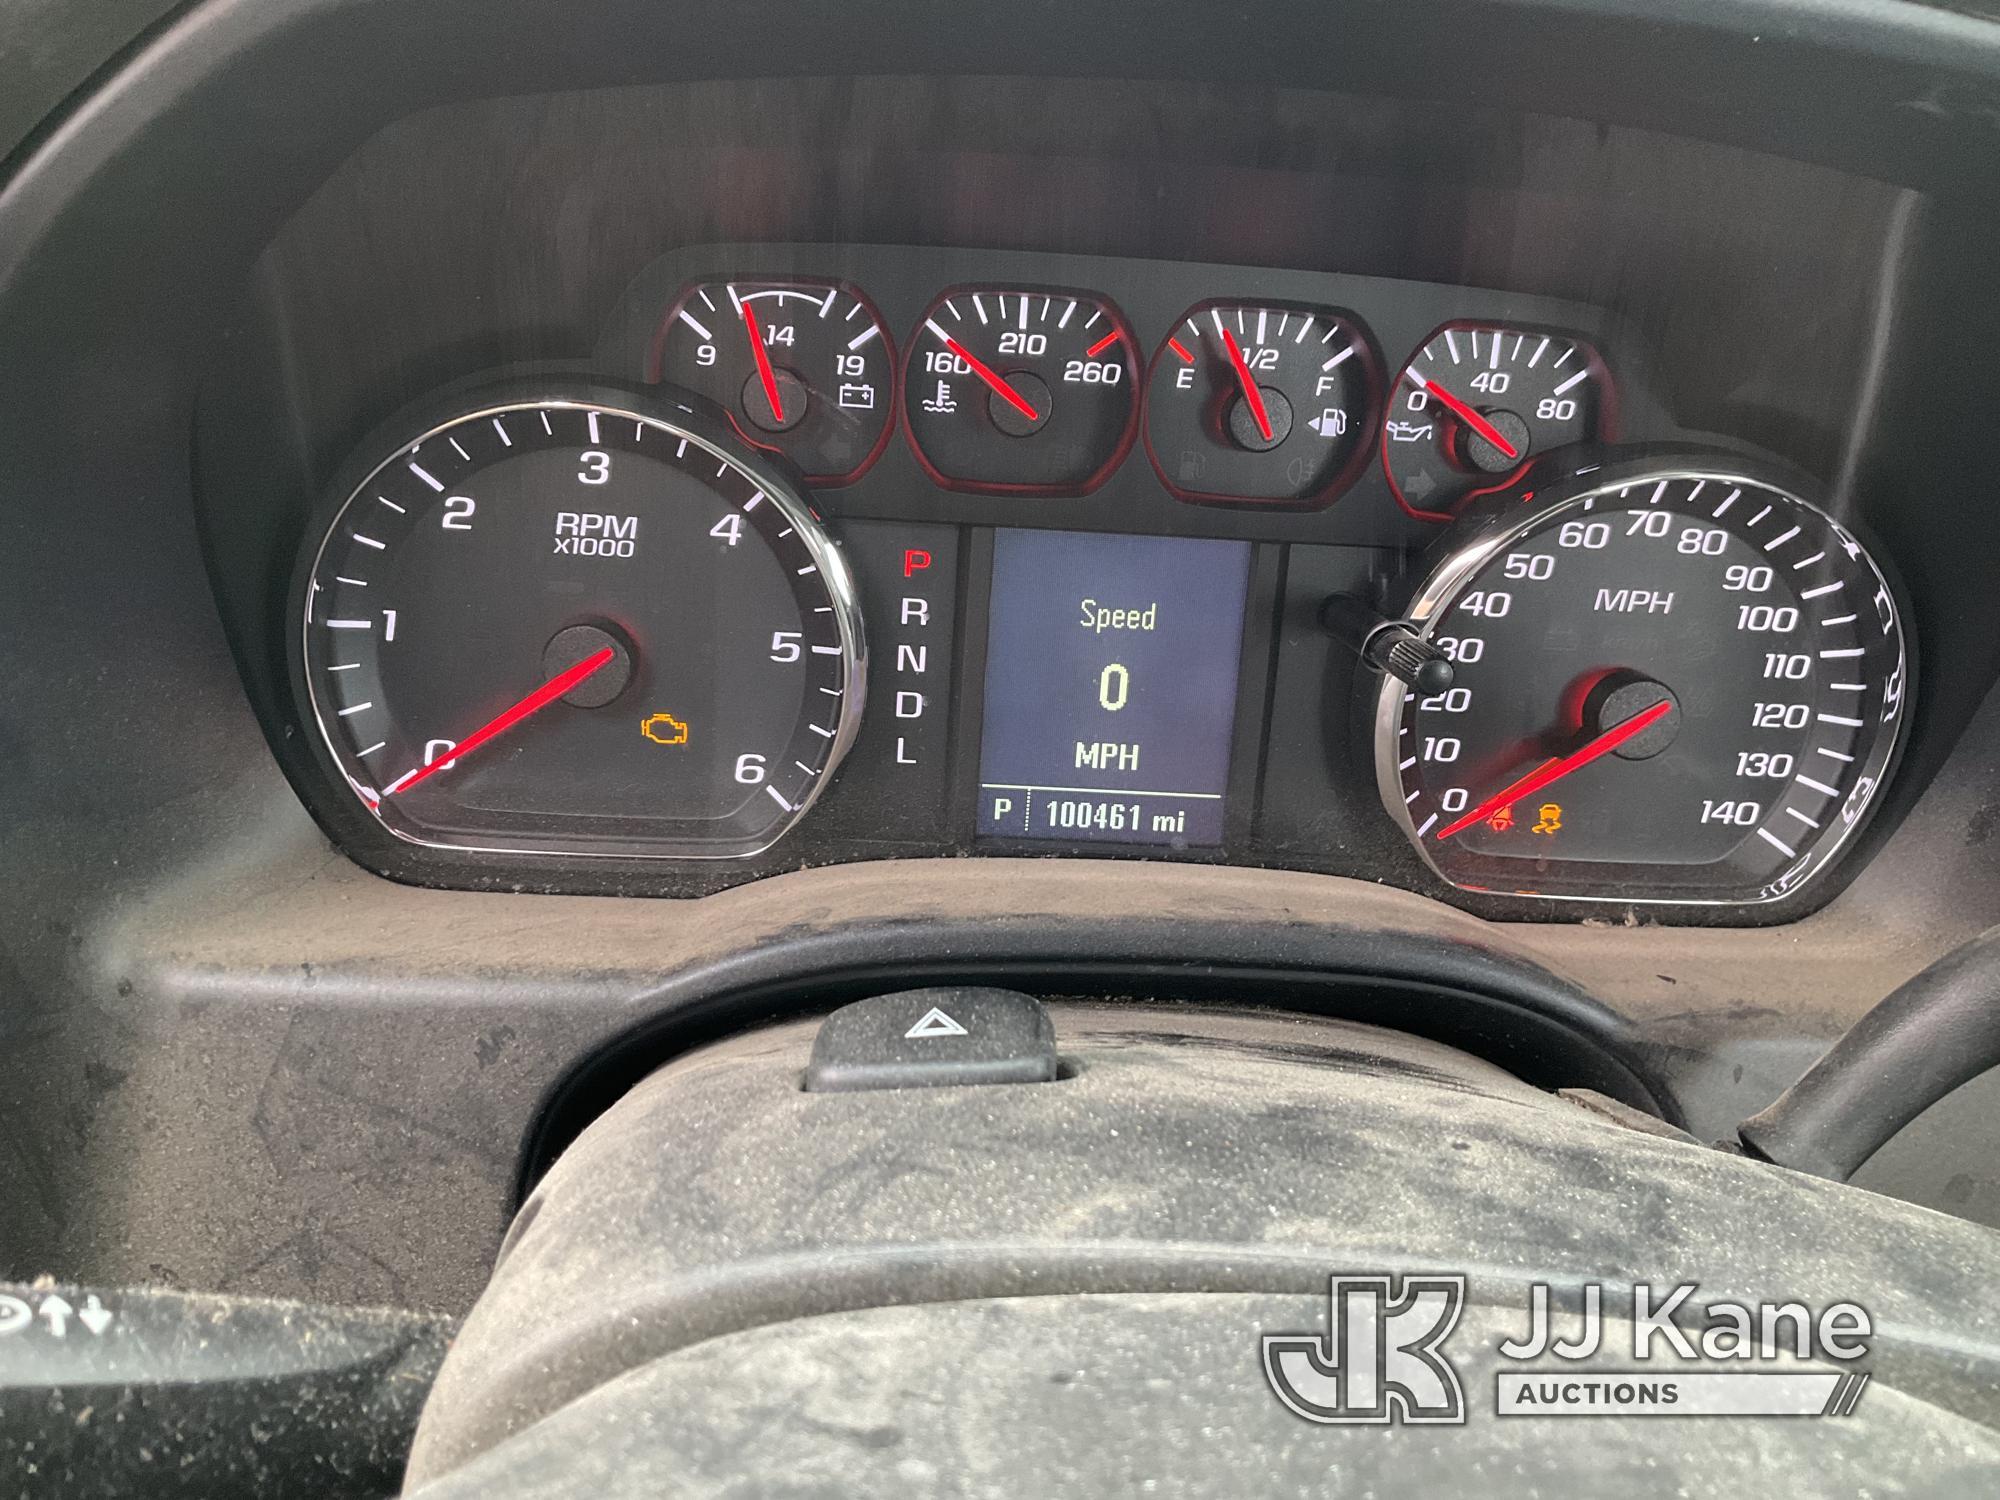 (Hawk Point, MO) 2017 Chevrolet Silverado 1500 Pickup Truck Not Running, Condition Unknown) (Engine